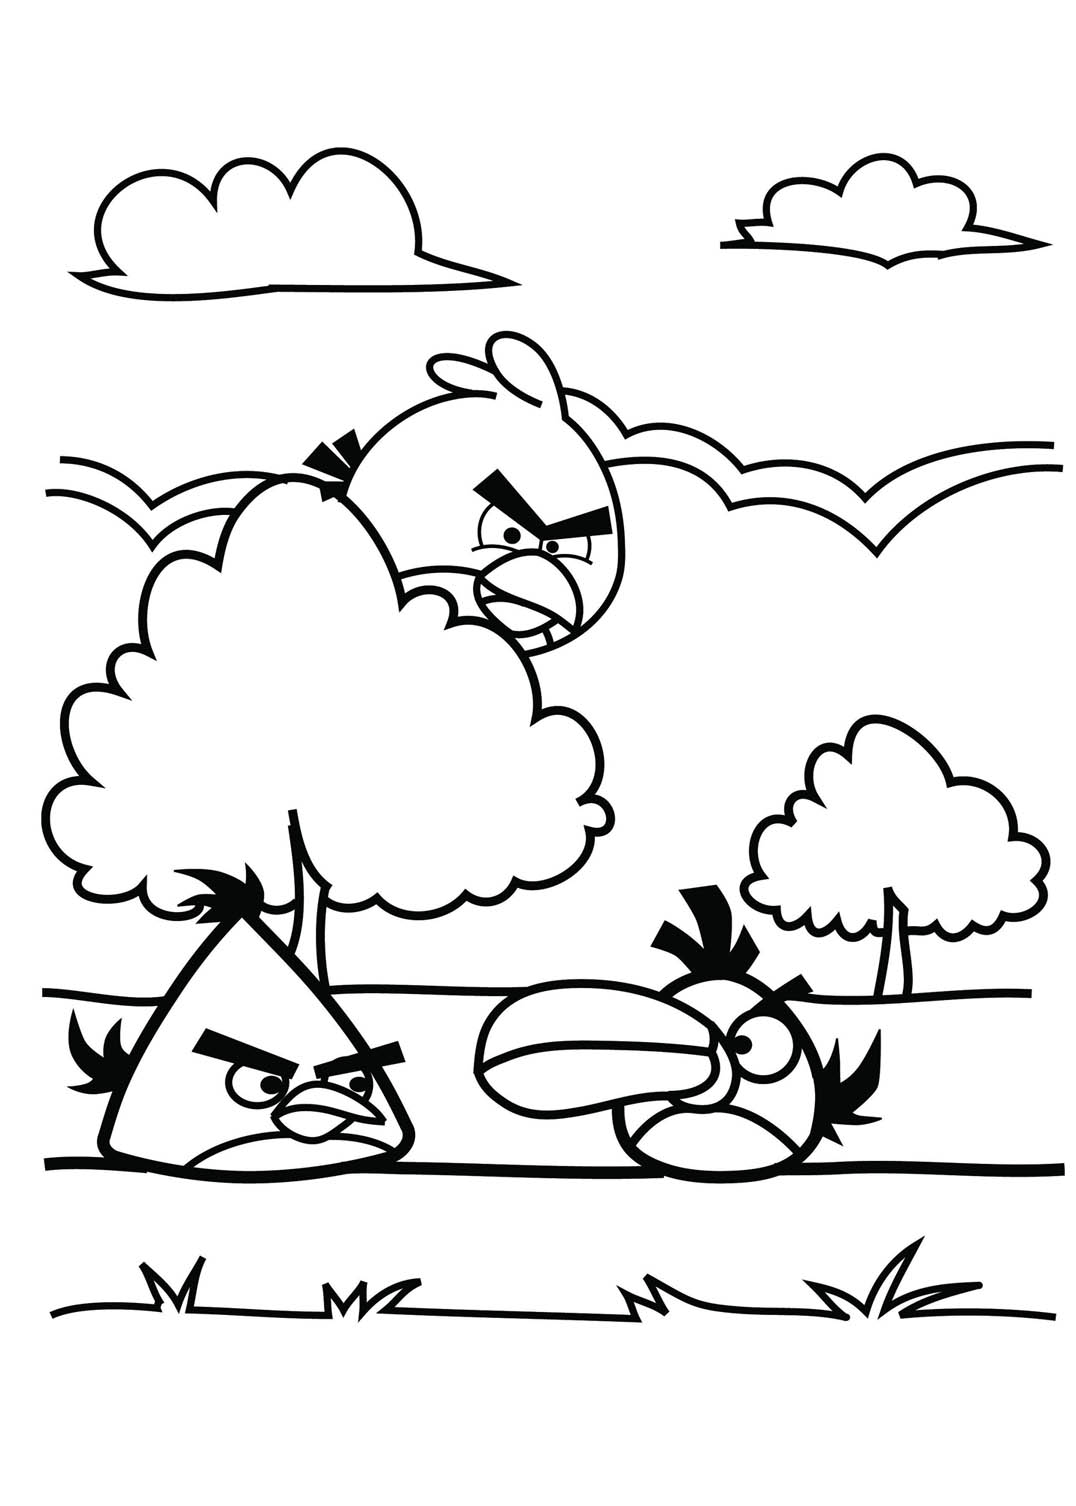 Aves zangadas a desenhar para colorir